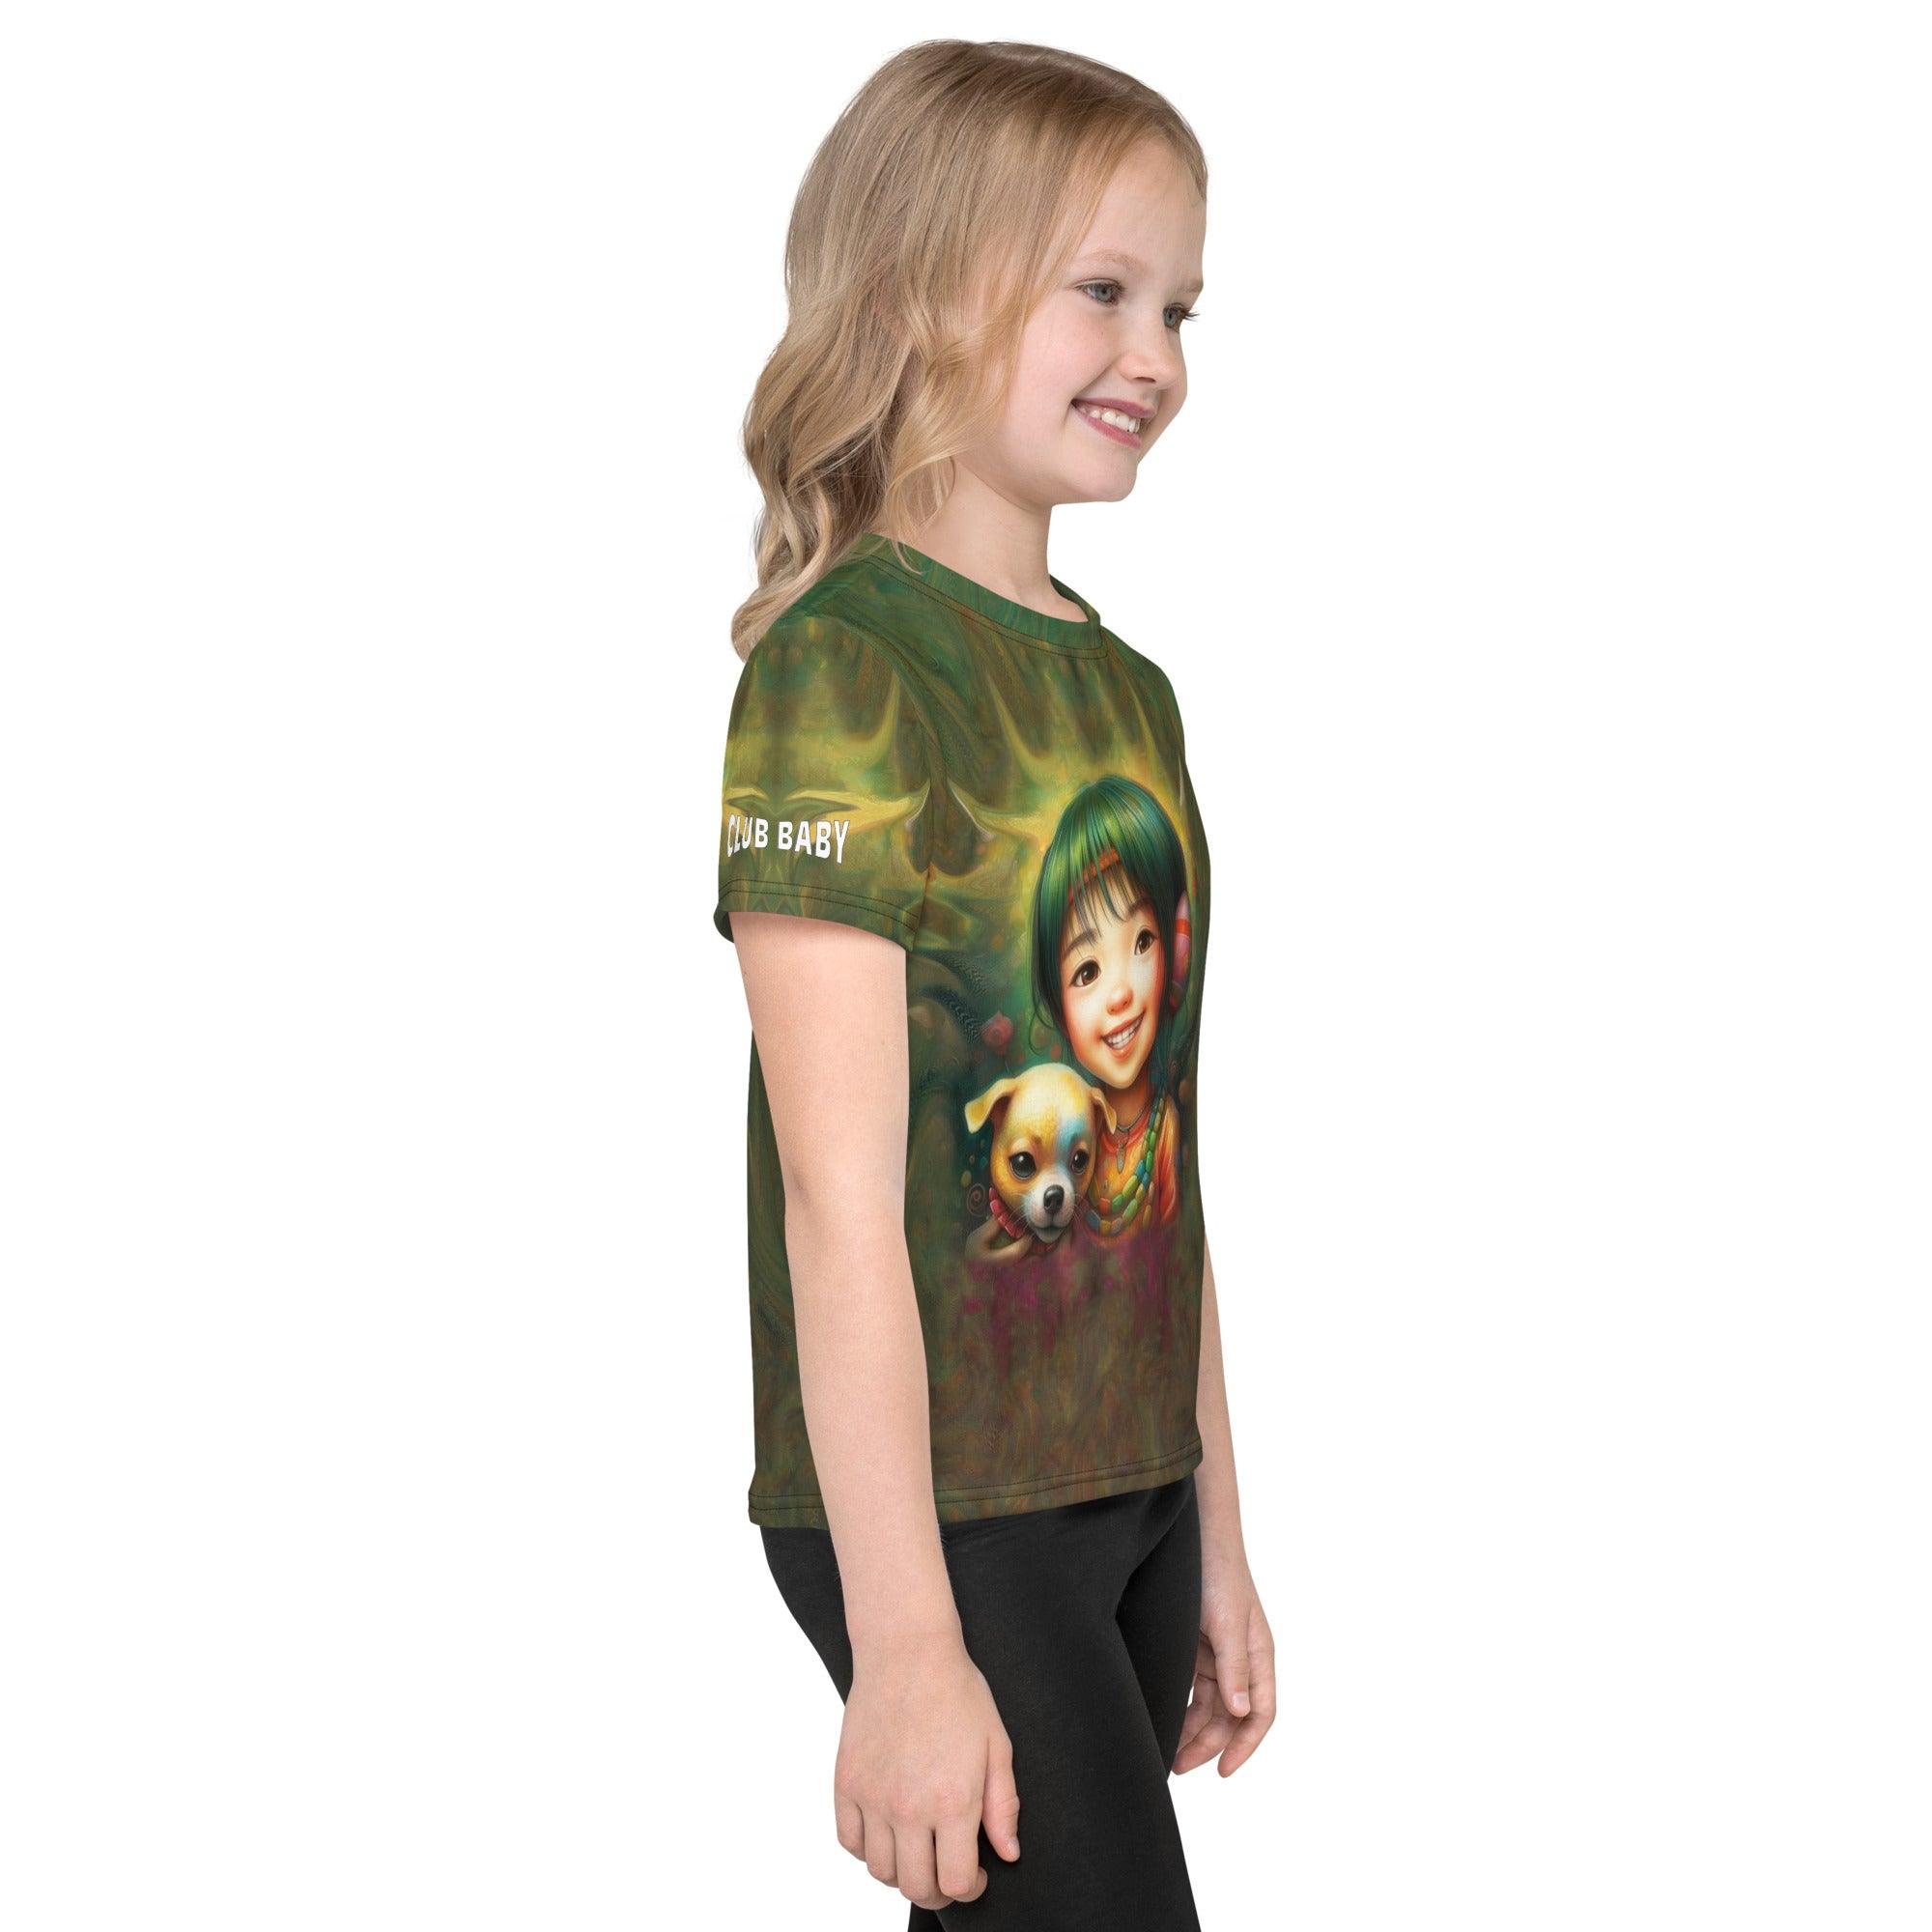 CB6-37 Kids Crew Neck T-Shirt - Available Colors